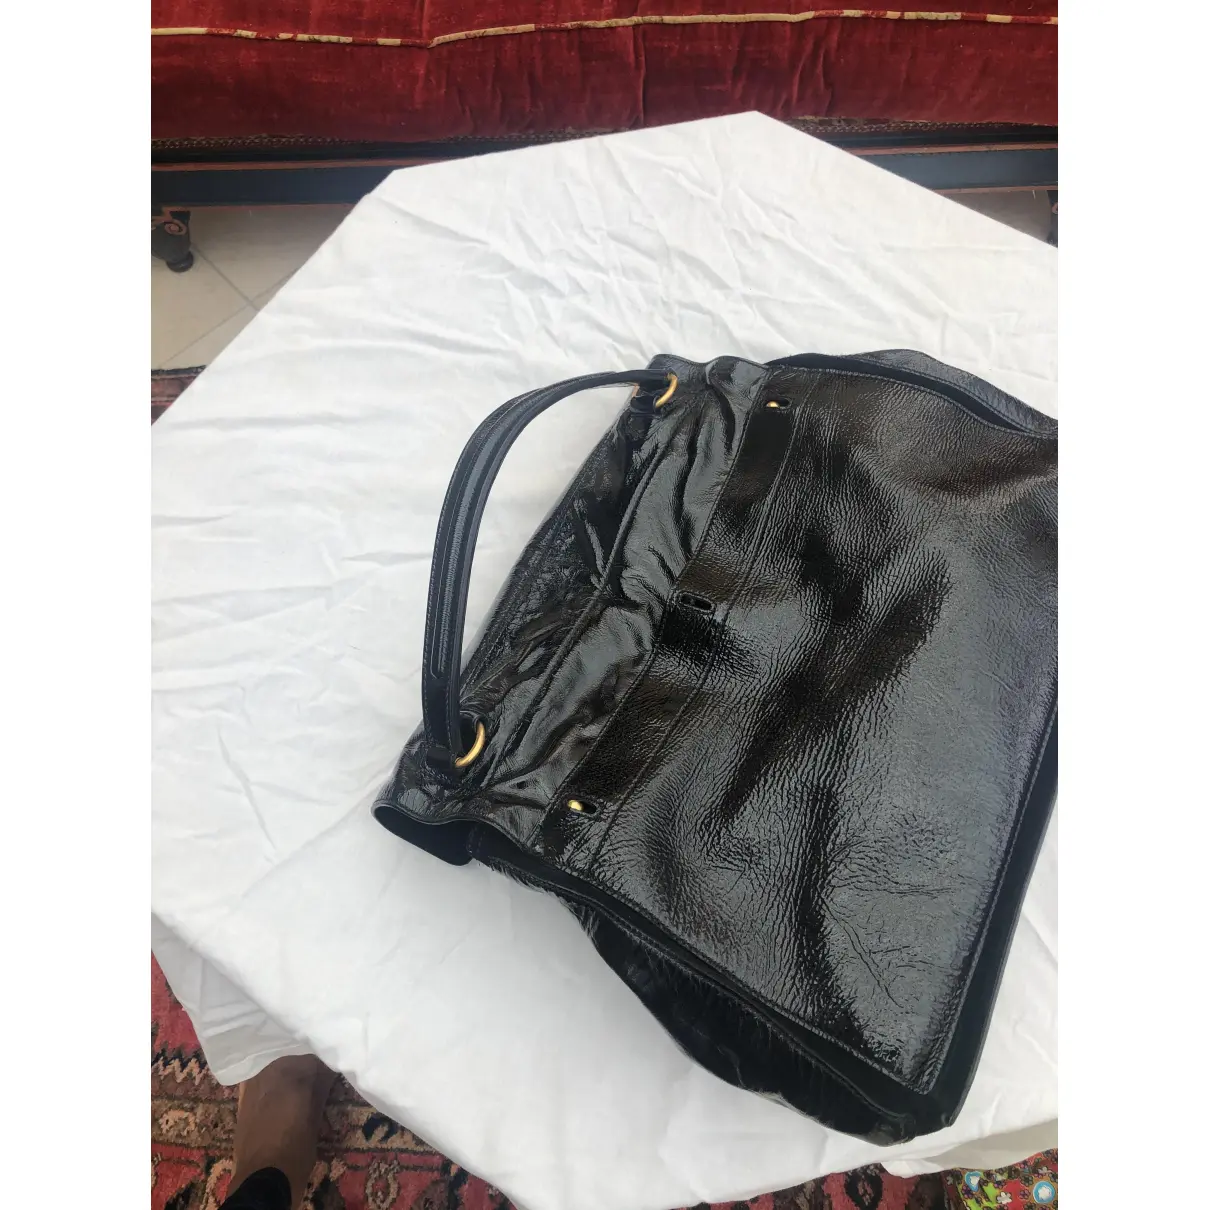 Muse patent leather handbag Yves Saint Laurent